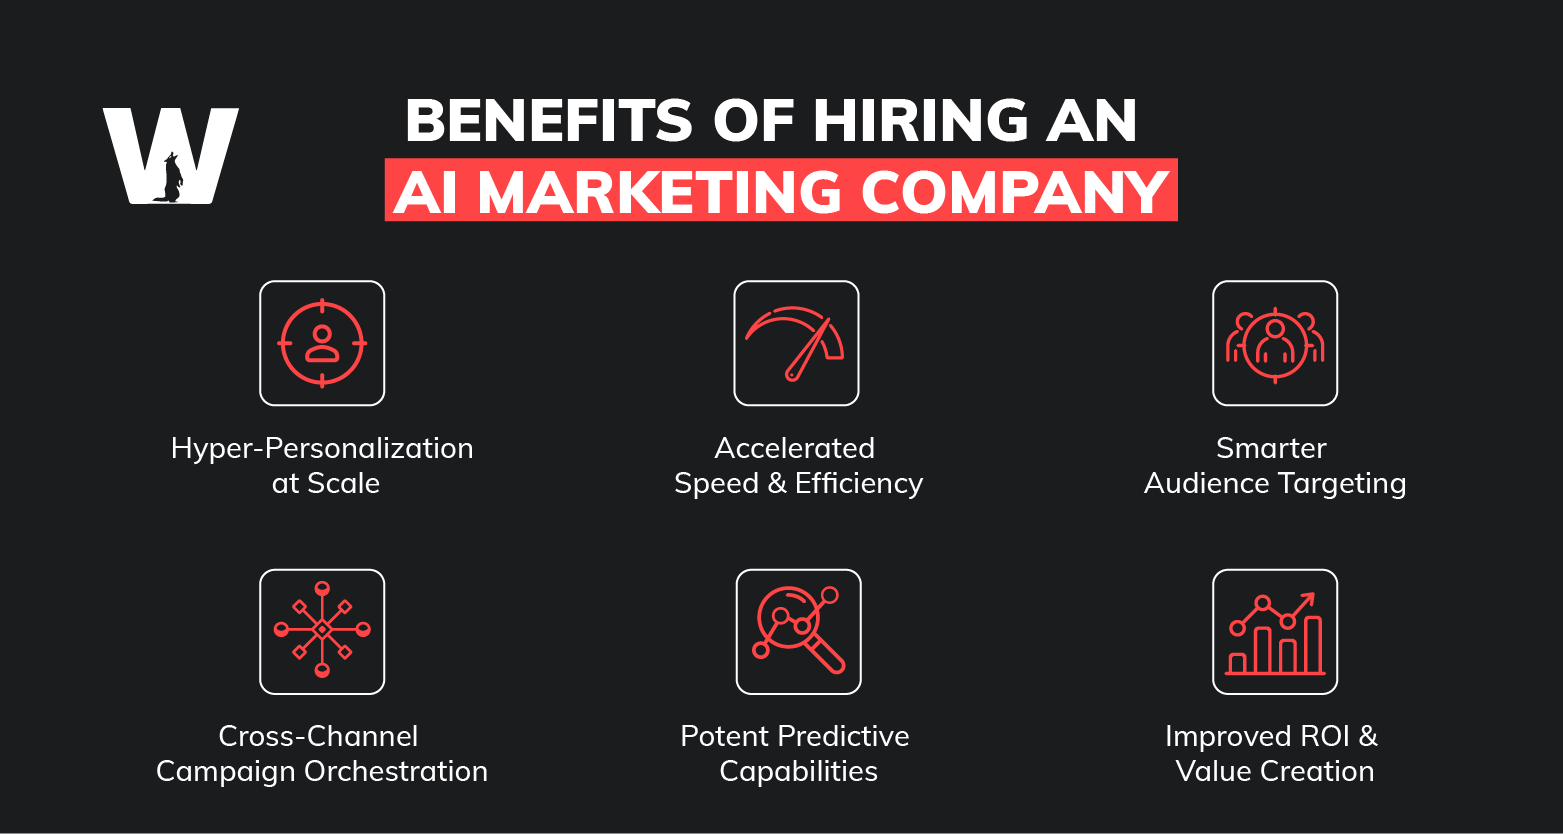 Benefits of Hiring an AI Marketing Company